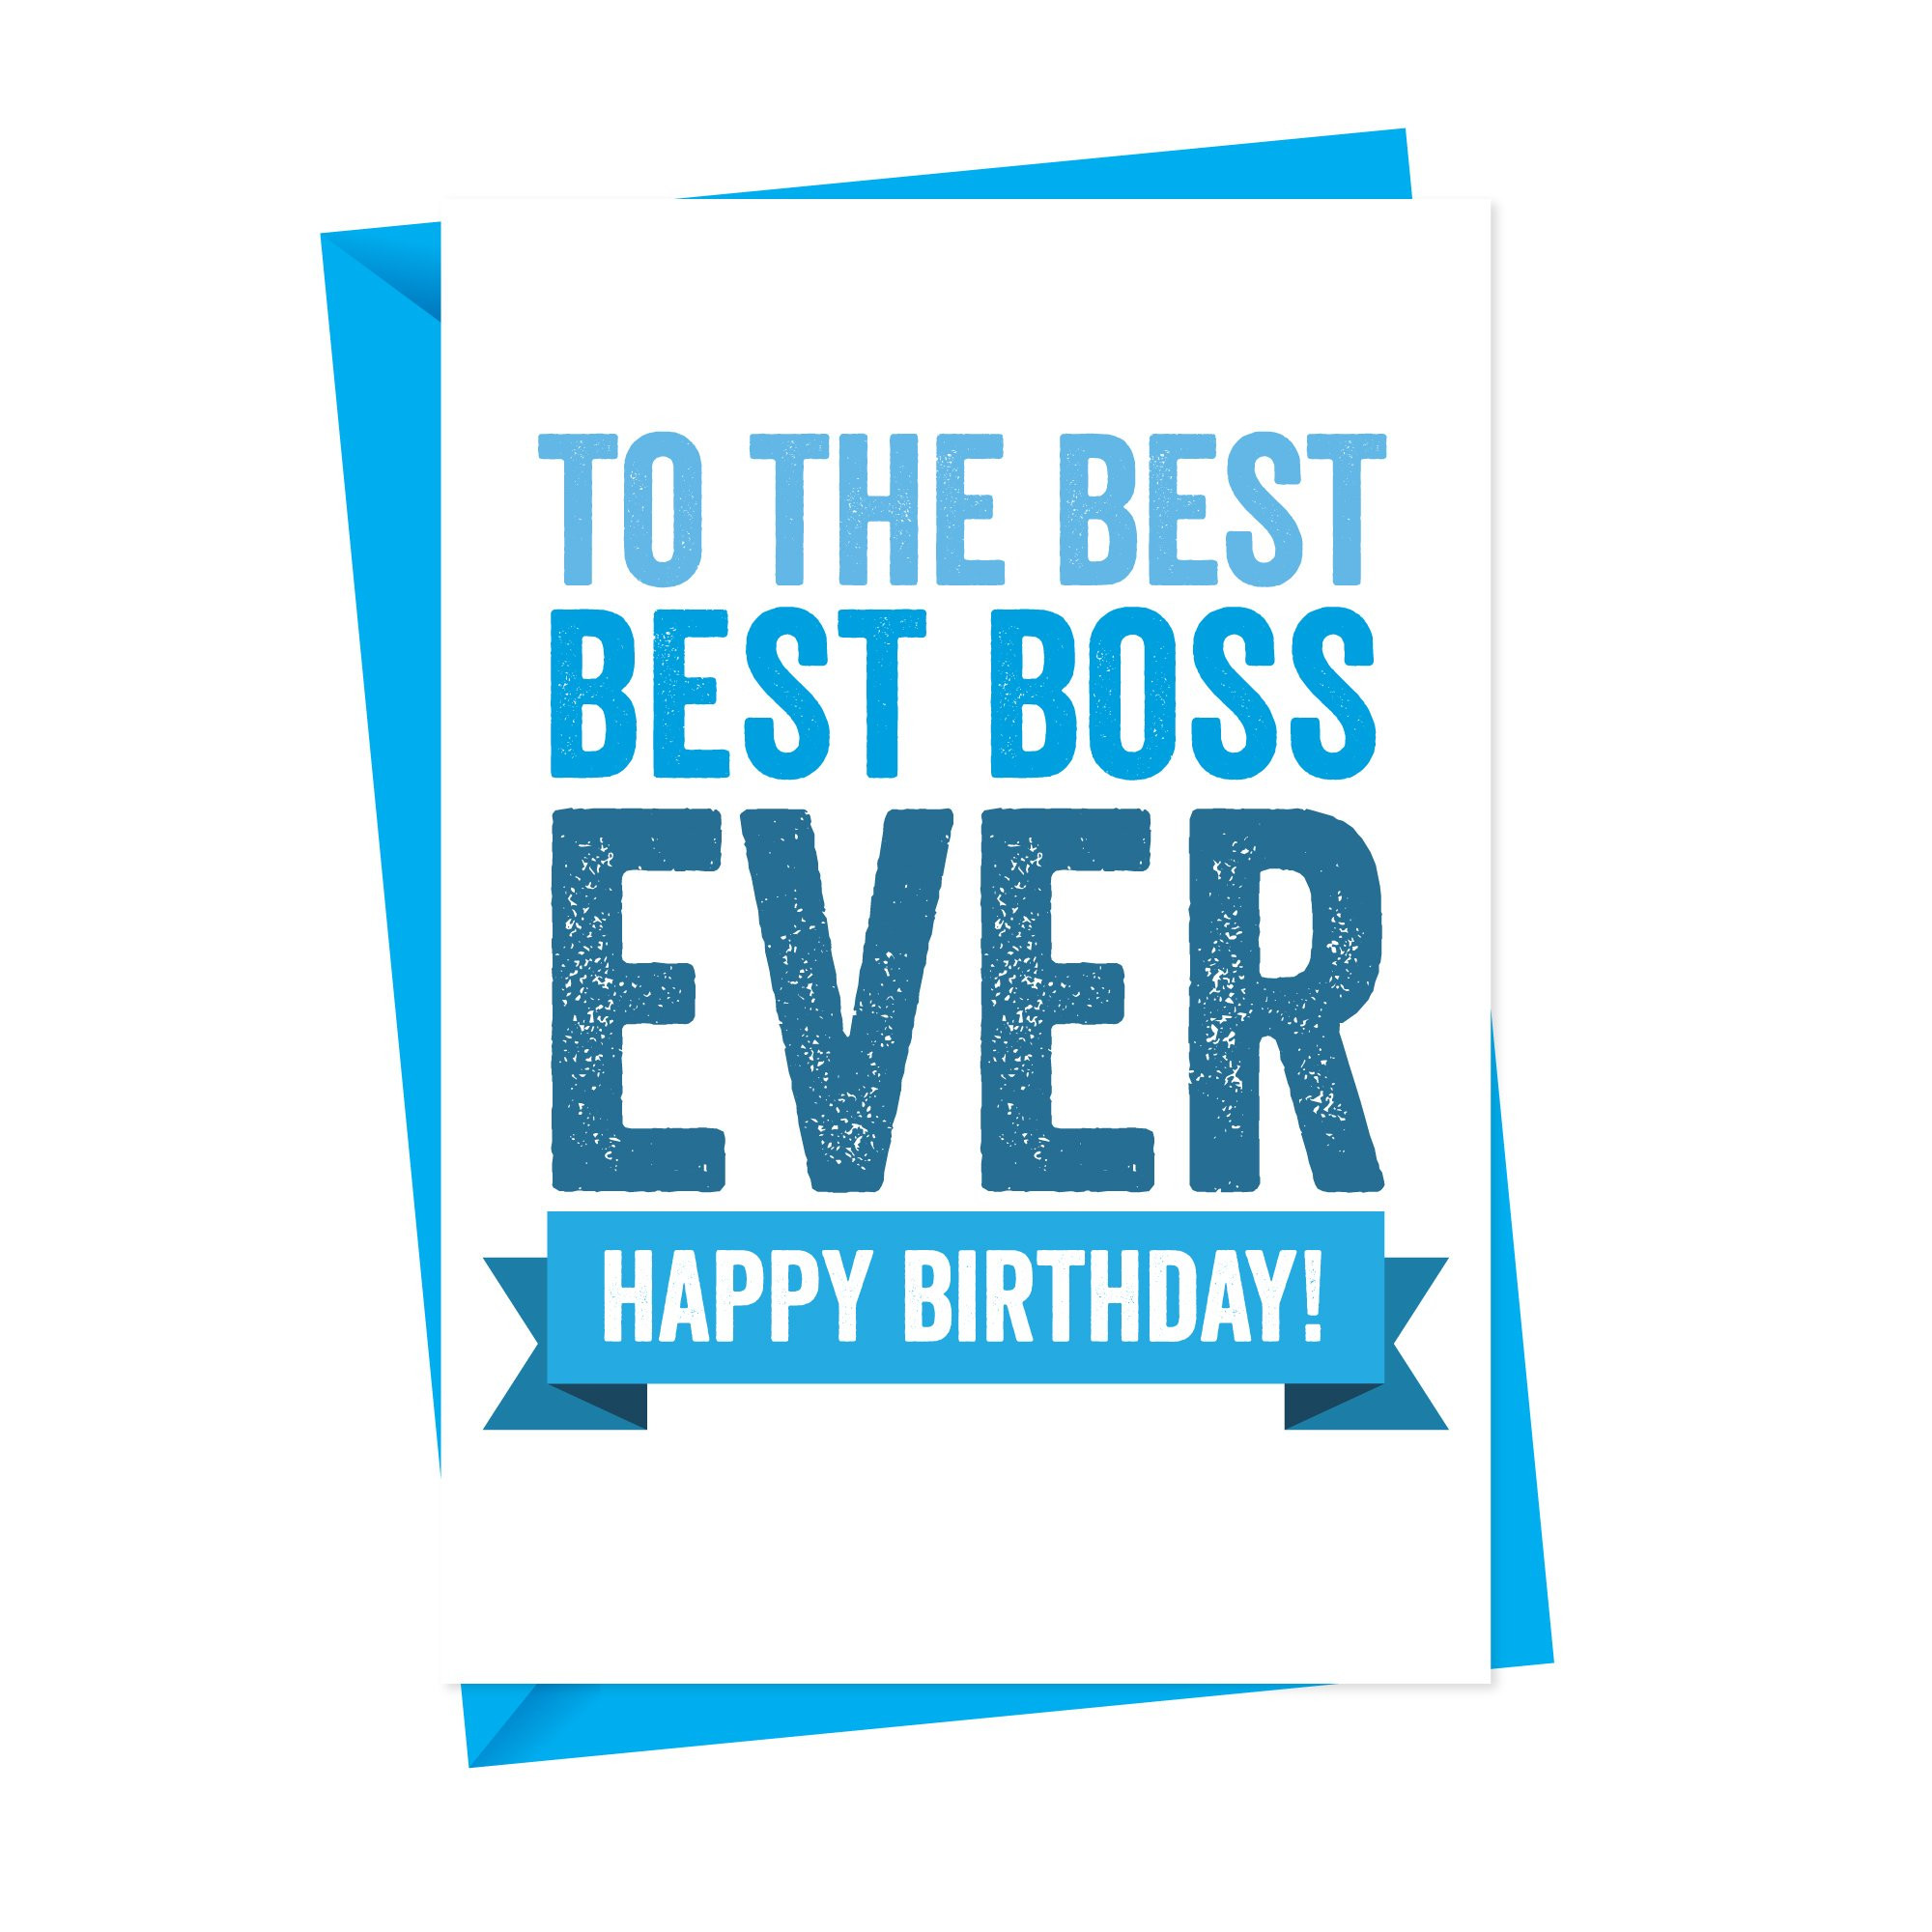 Boss Birthday Card
 Best Boss birthday card birthday card